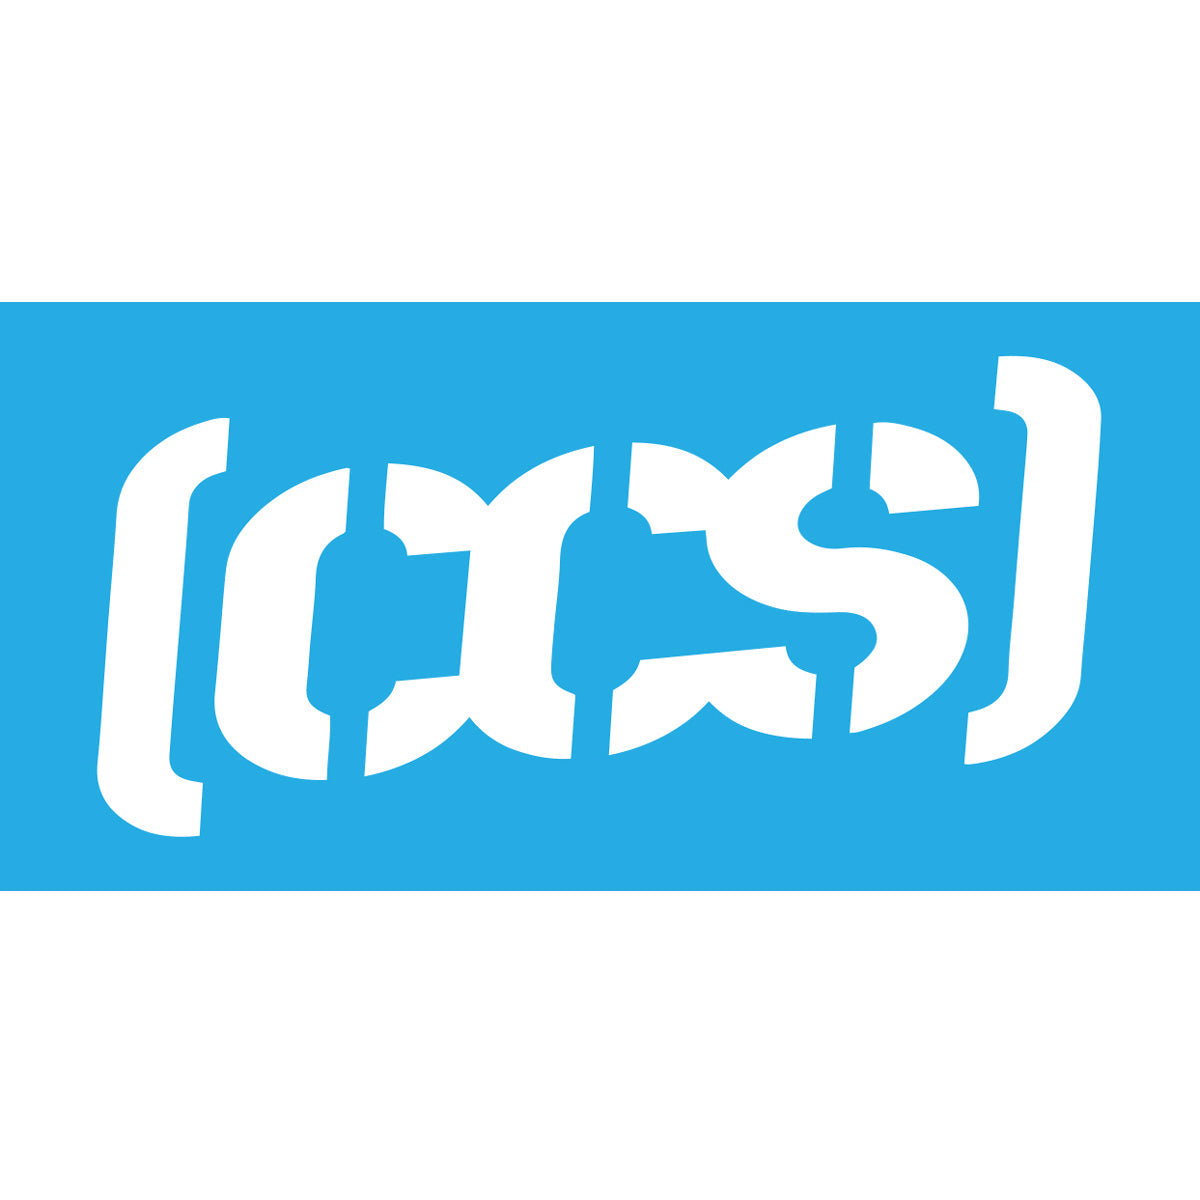 CCS Stock Sticker - Blue image 1